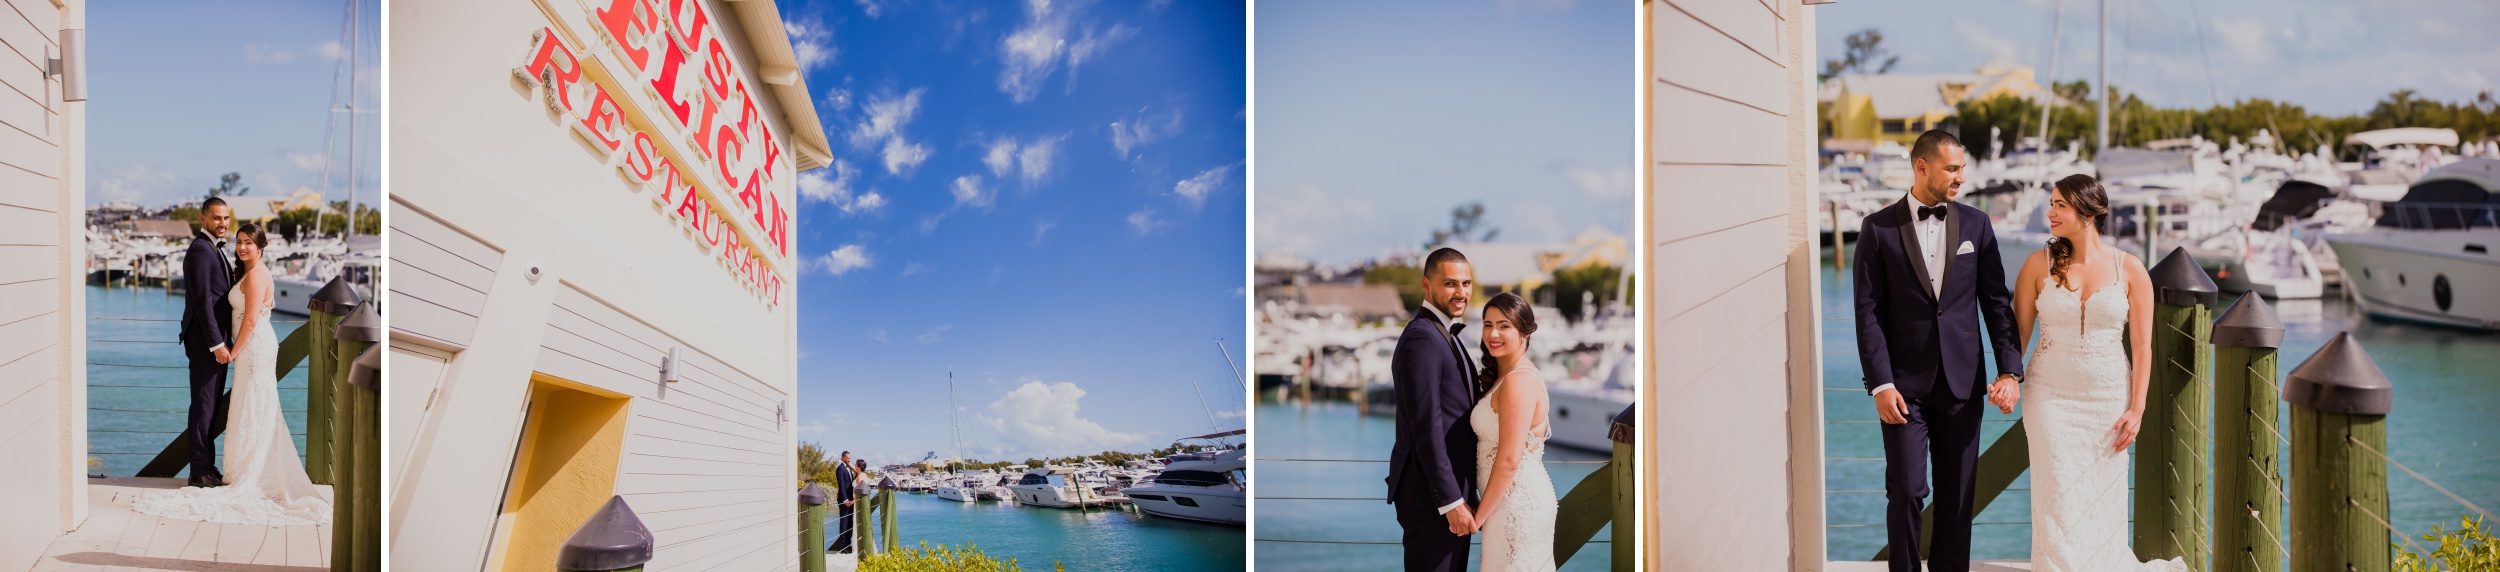 Wedding - Rusty Pelican - Key Biscayne - Santy Martinez Photography 21.jpg